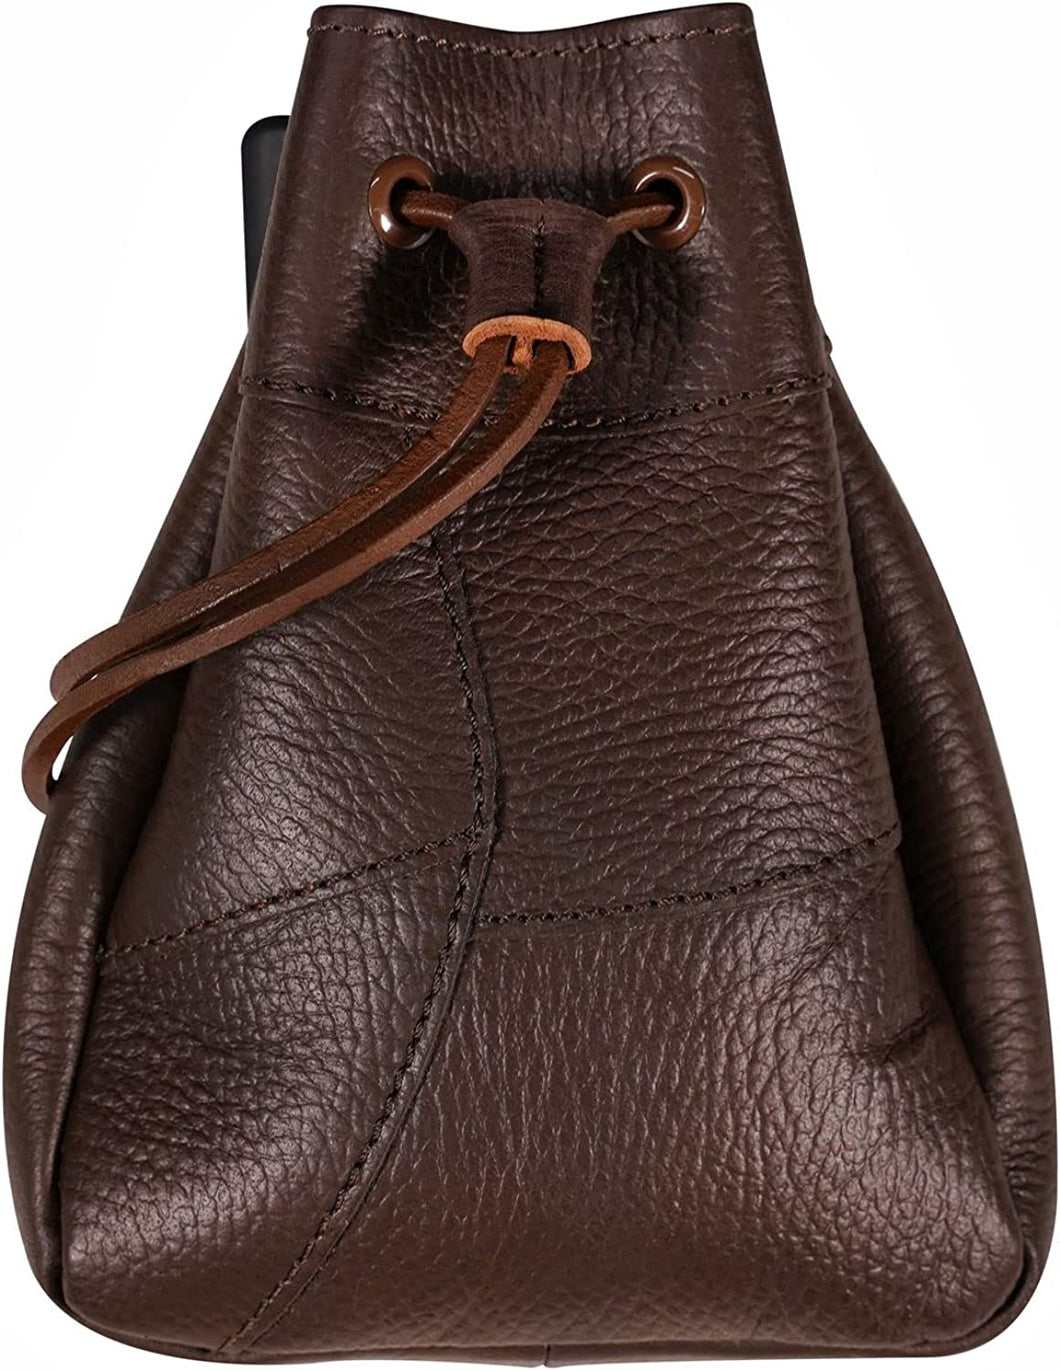 Mythrojan Medieval Drawstring Bag, Ideal for SCA LARP Reenactment & Ren Fair-Full Grain Leather, Brown 8.5